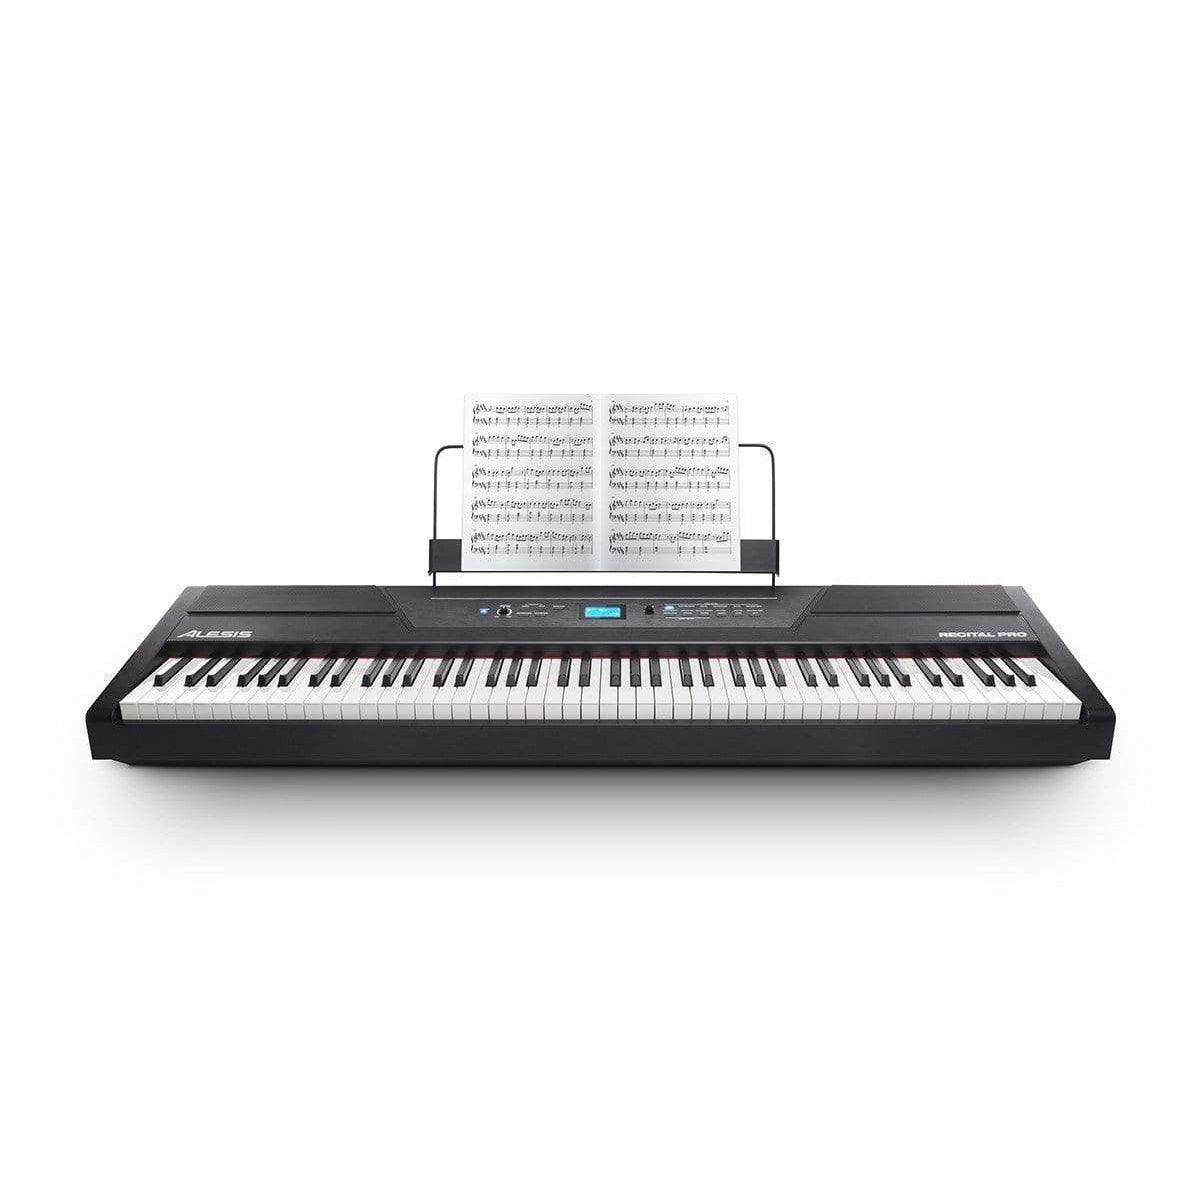 Alesis Recital Pro 88-Key Digital Piano with Hammer-Action Keys